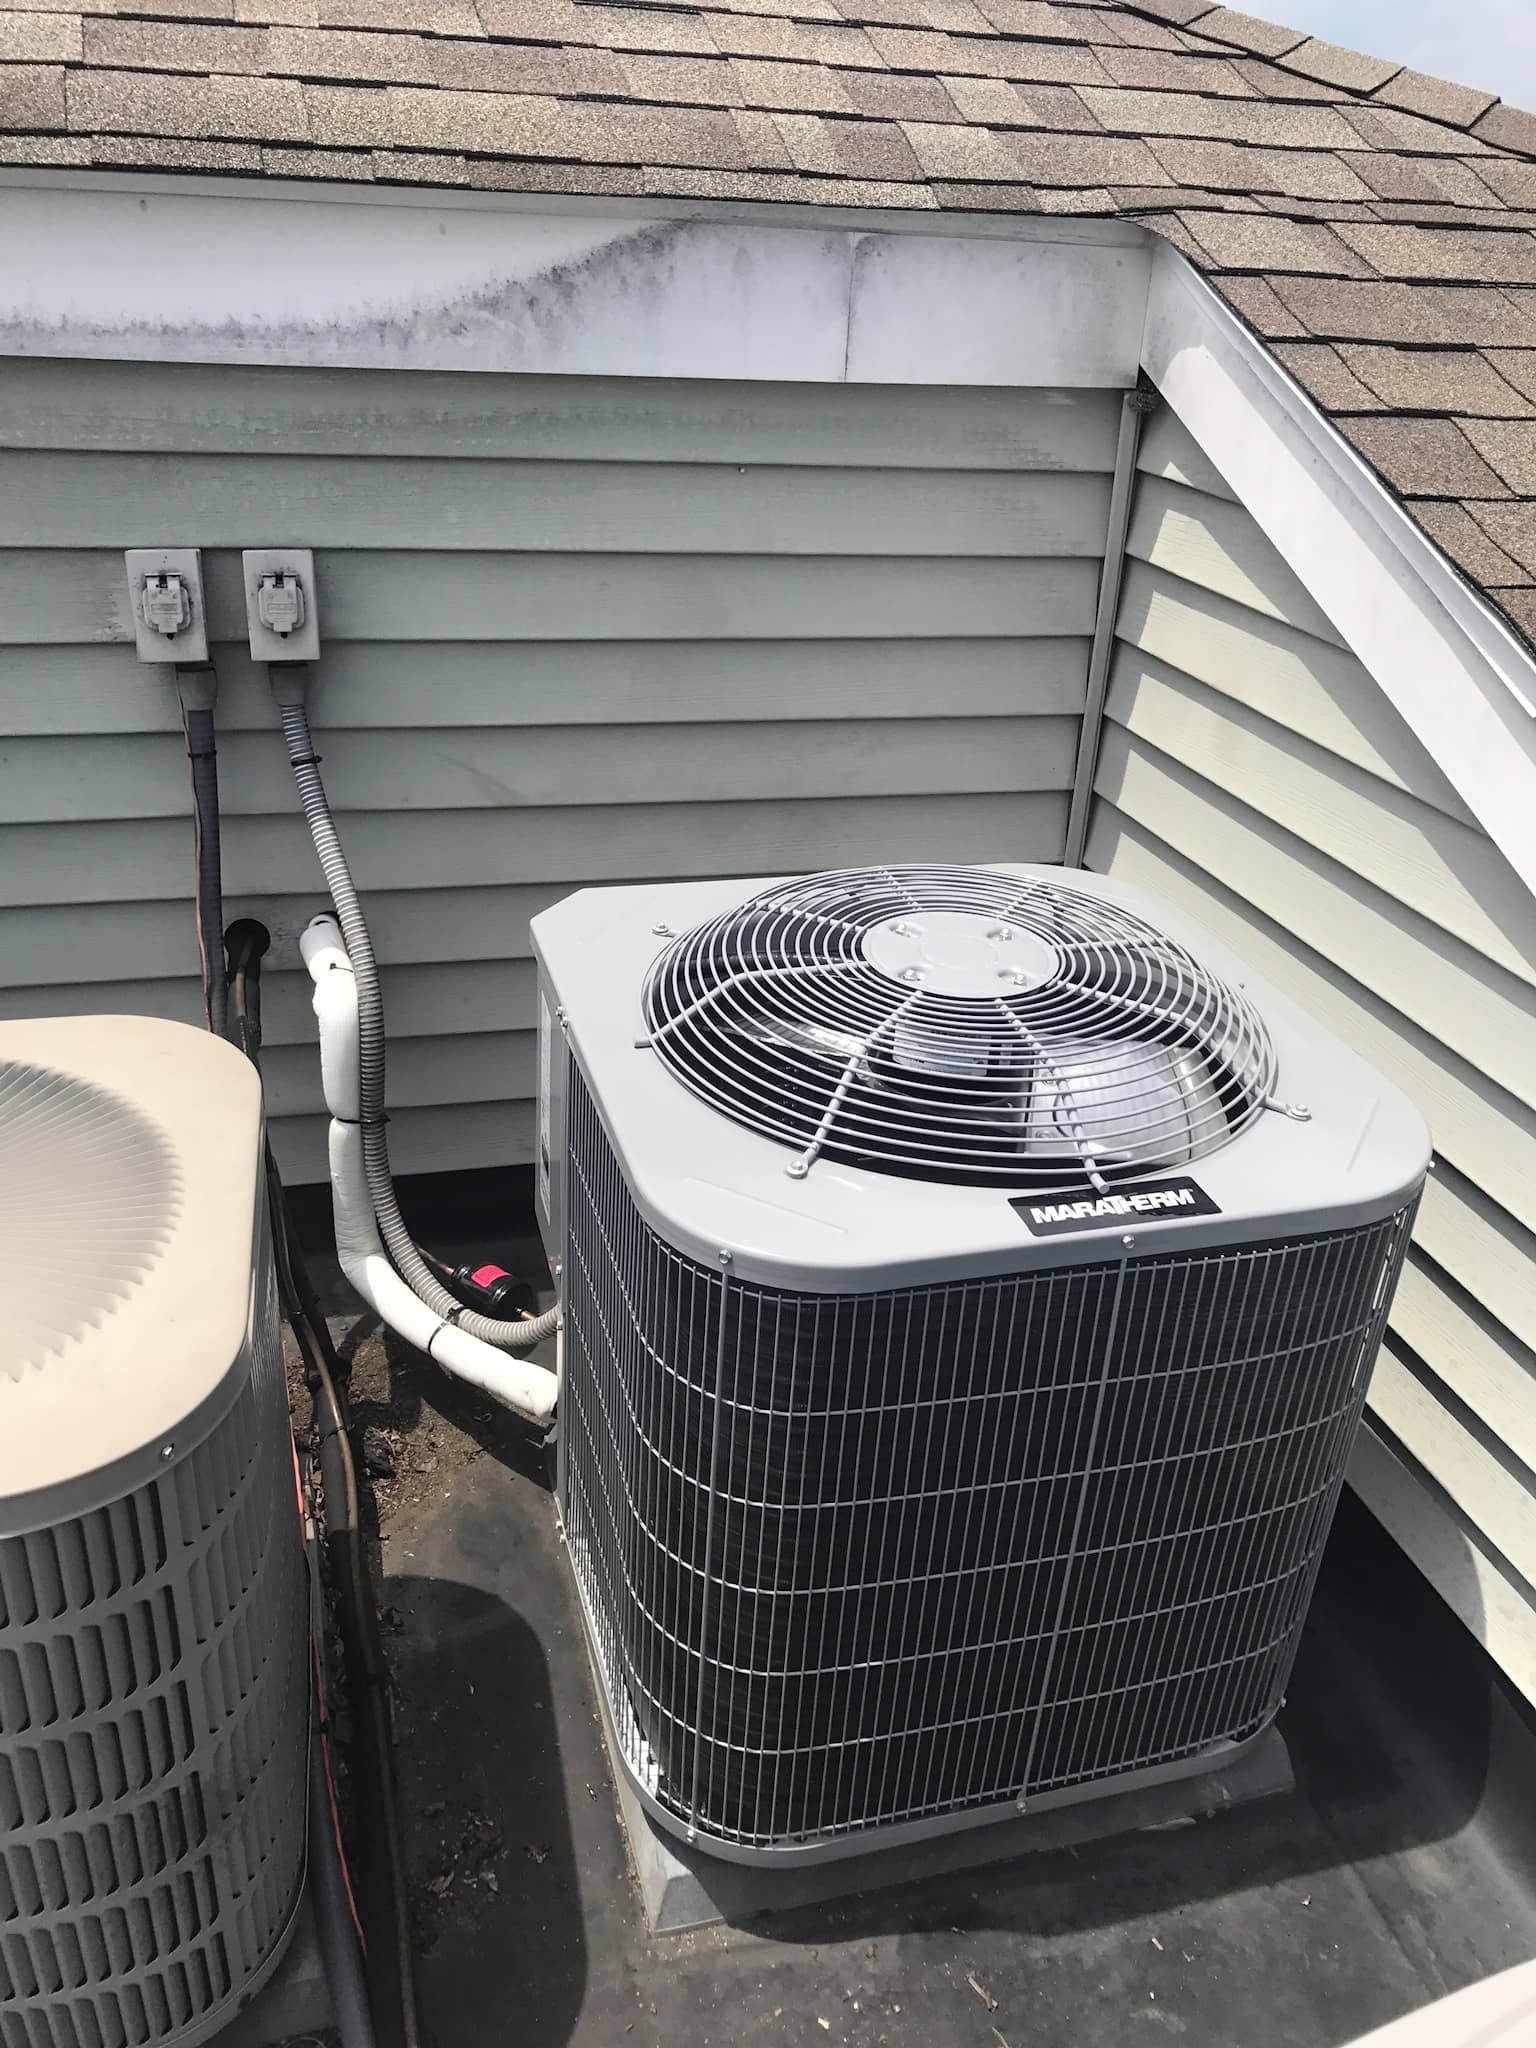 AC maintenance and installation